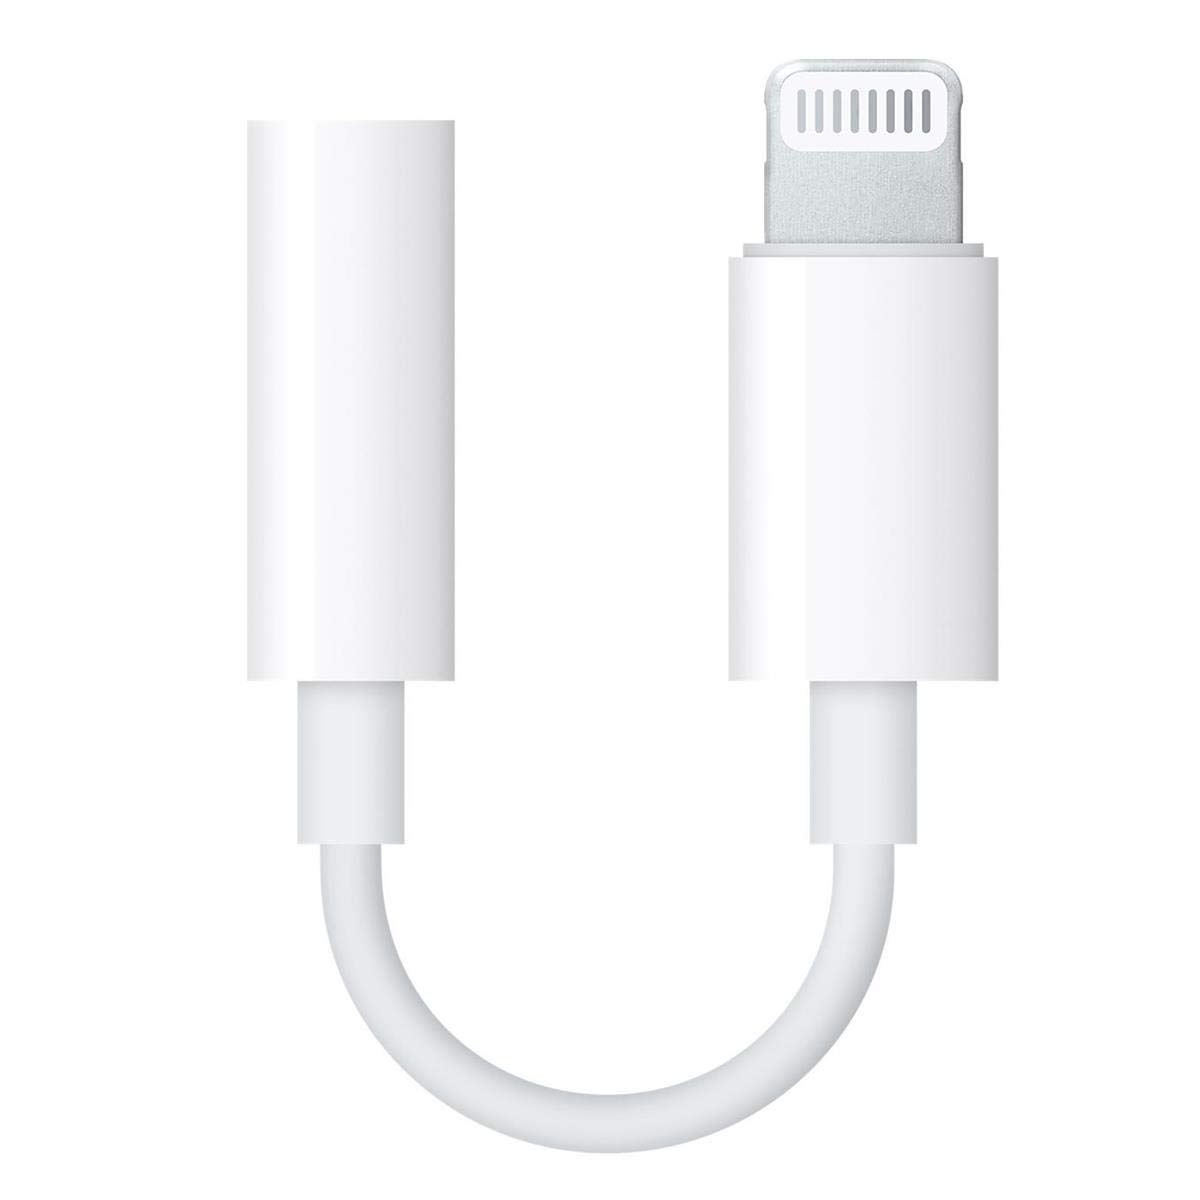 Apple 2 Pack Lightning to 3.5mm Headphone Jack Adapter